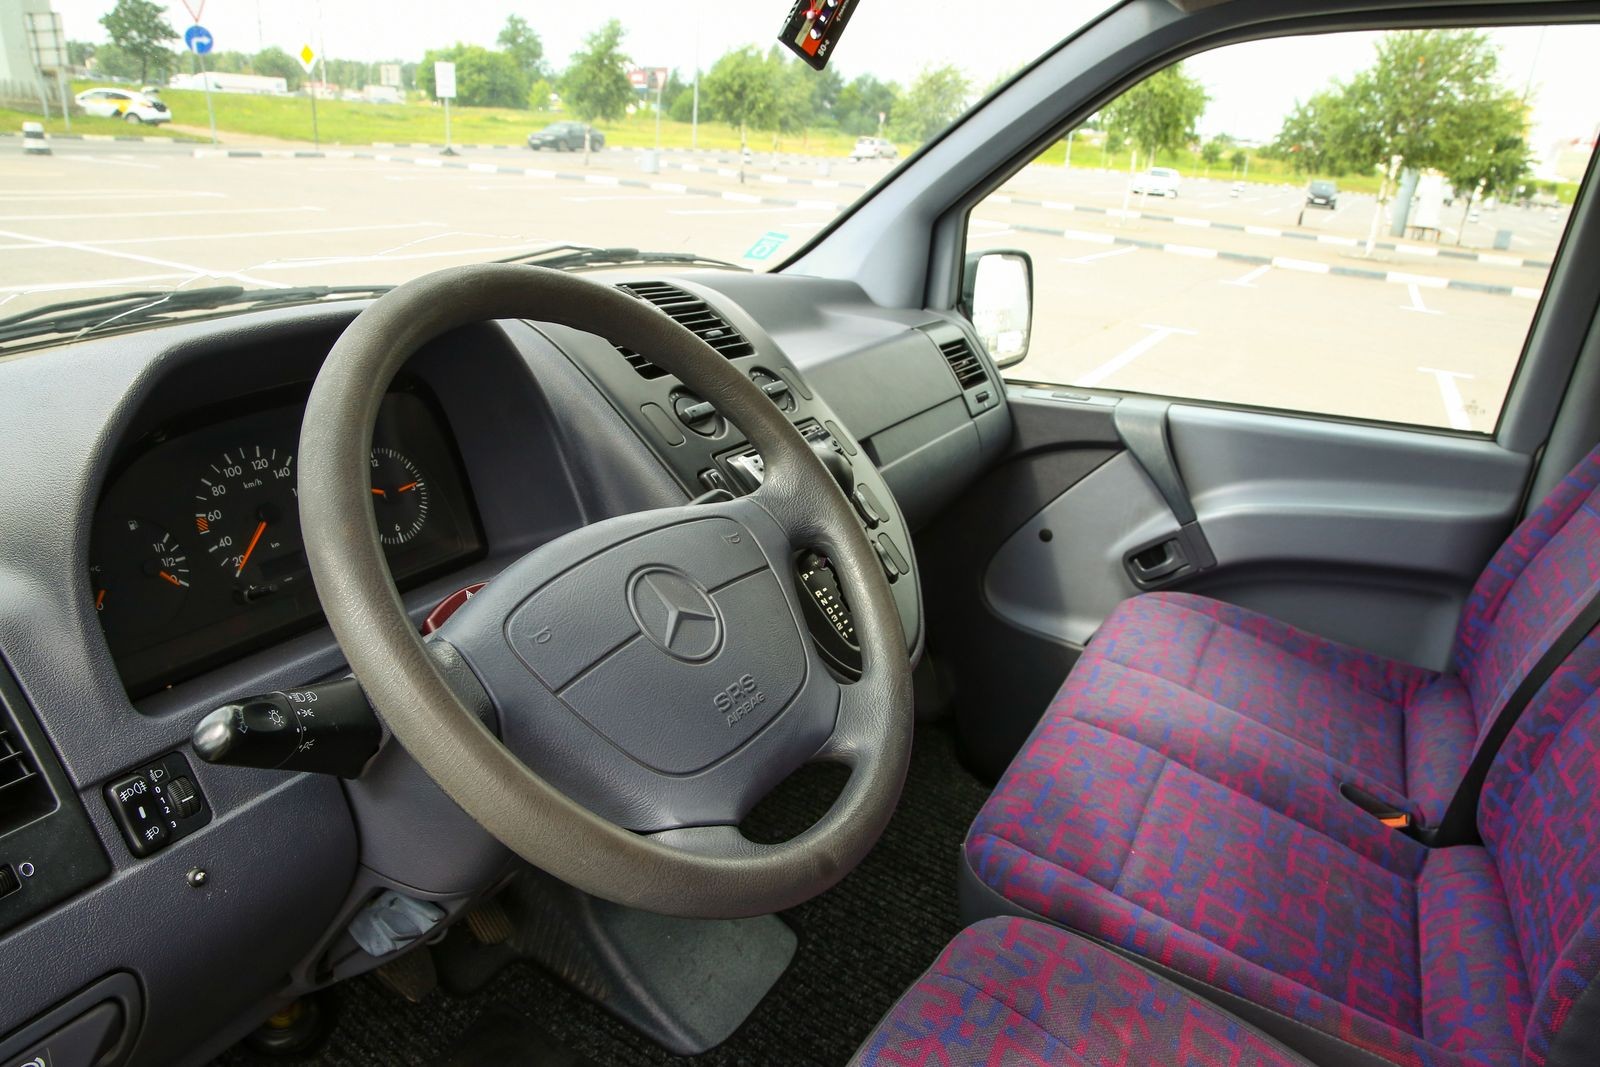 Mercedes Vito W638 с пробегом: кузов, салон, электрика - – автомобильный журнал